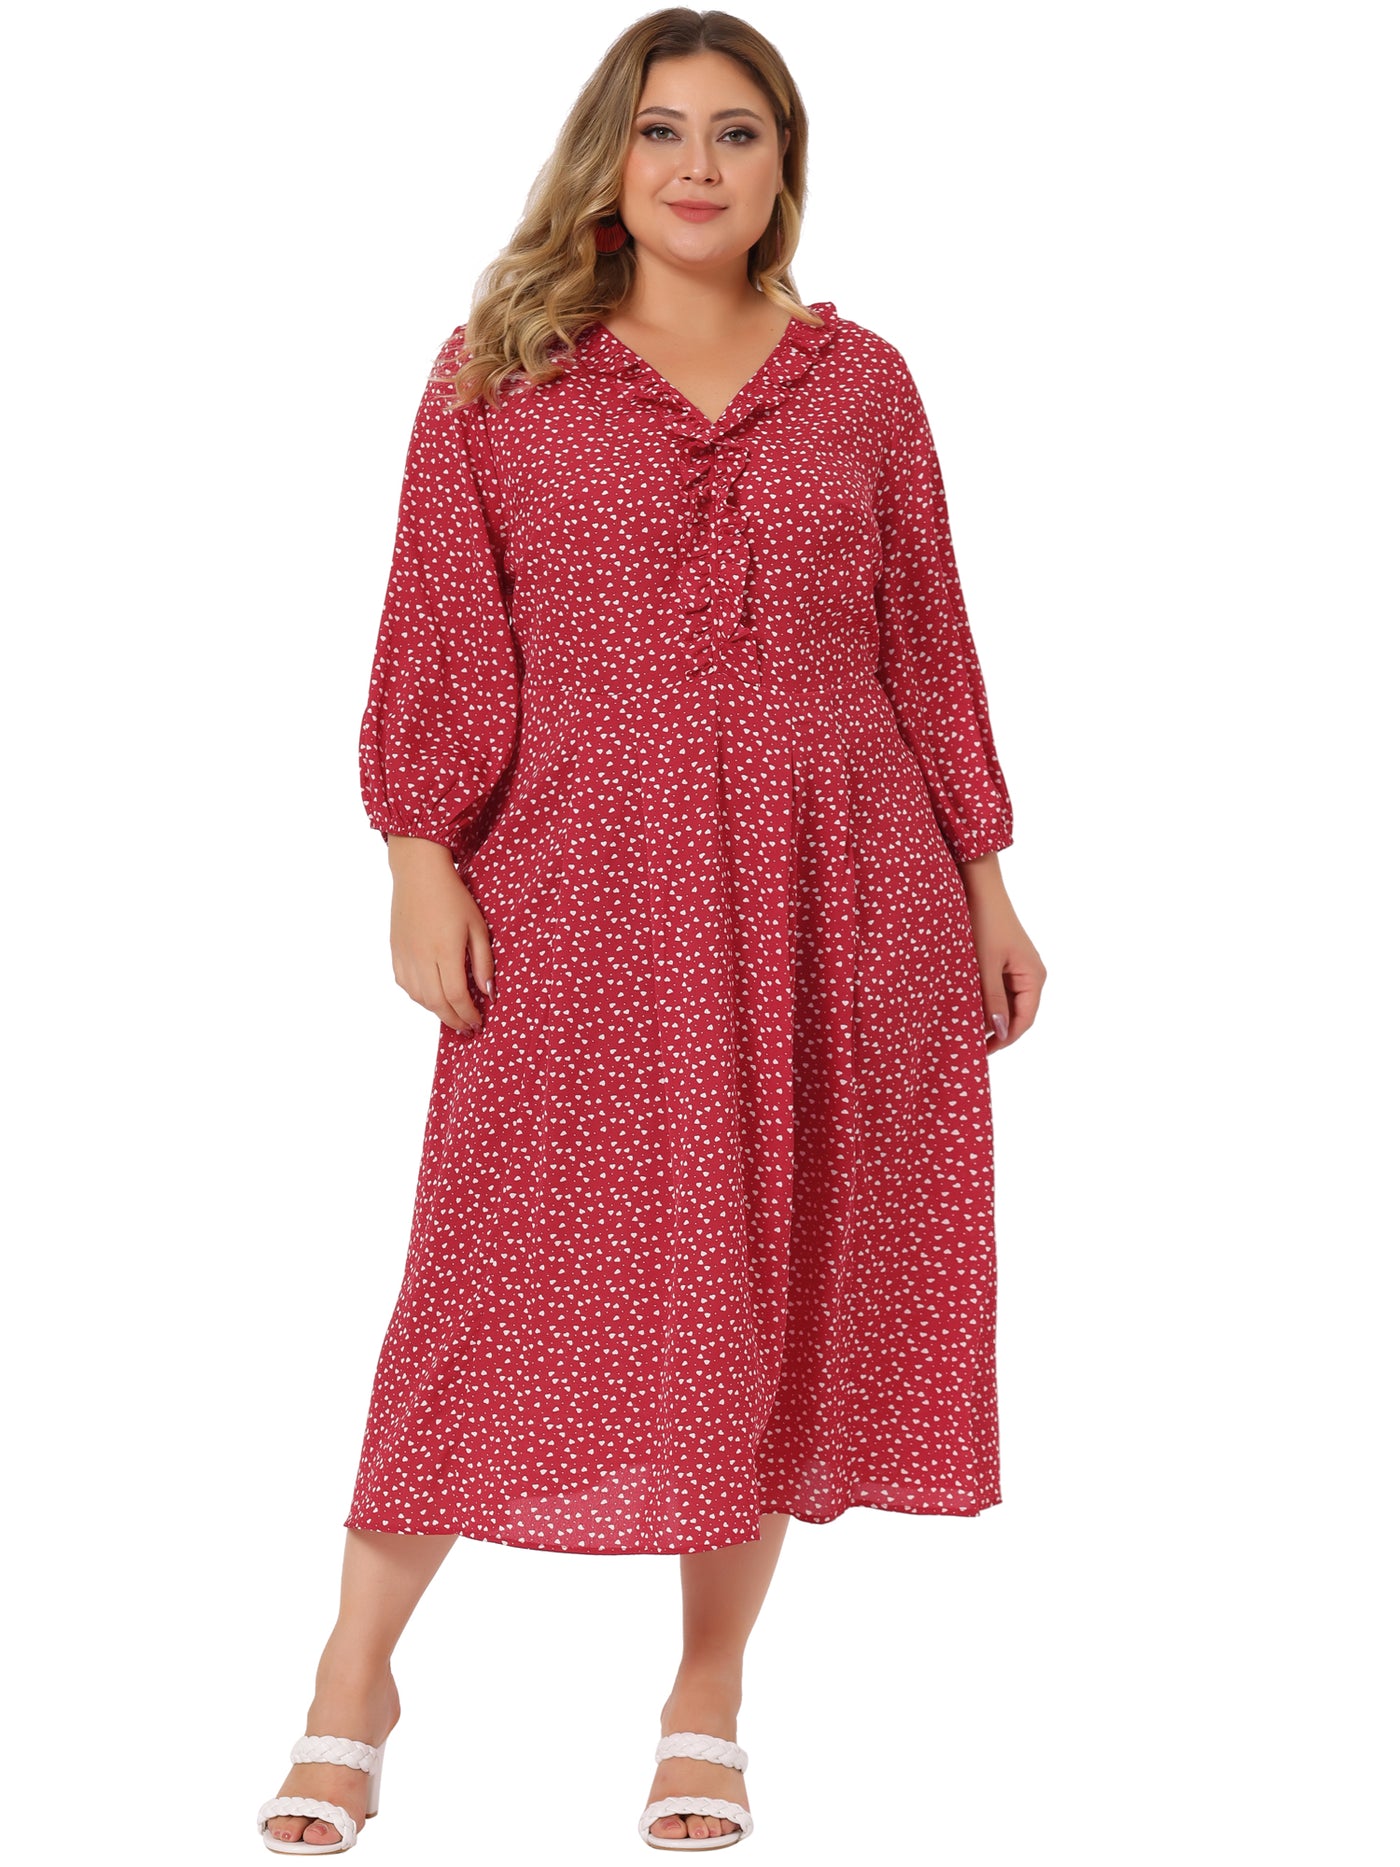 Bublédon Plus Size Dress for Women Casual Elbow Sleeve Sweetheart Print Midi Ruffle Dresses